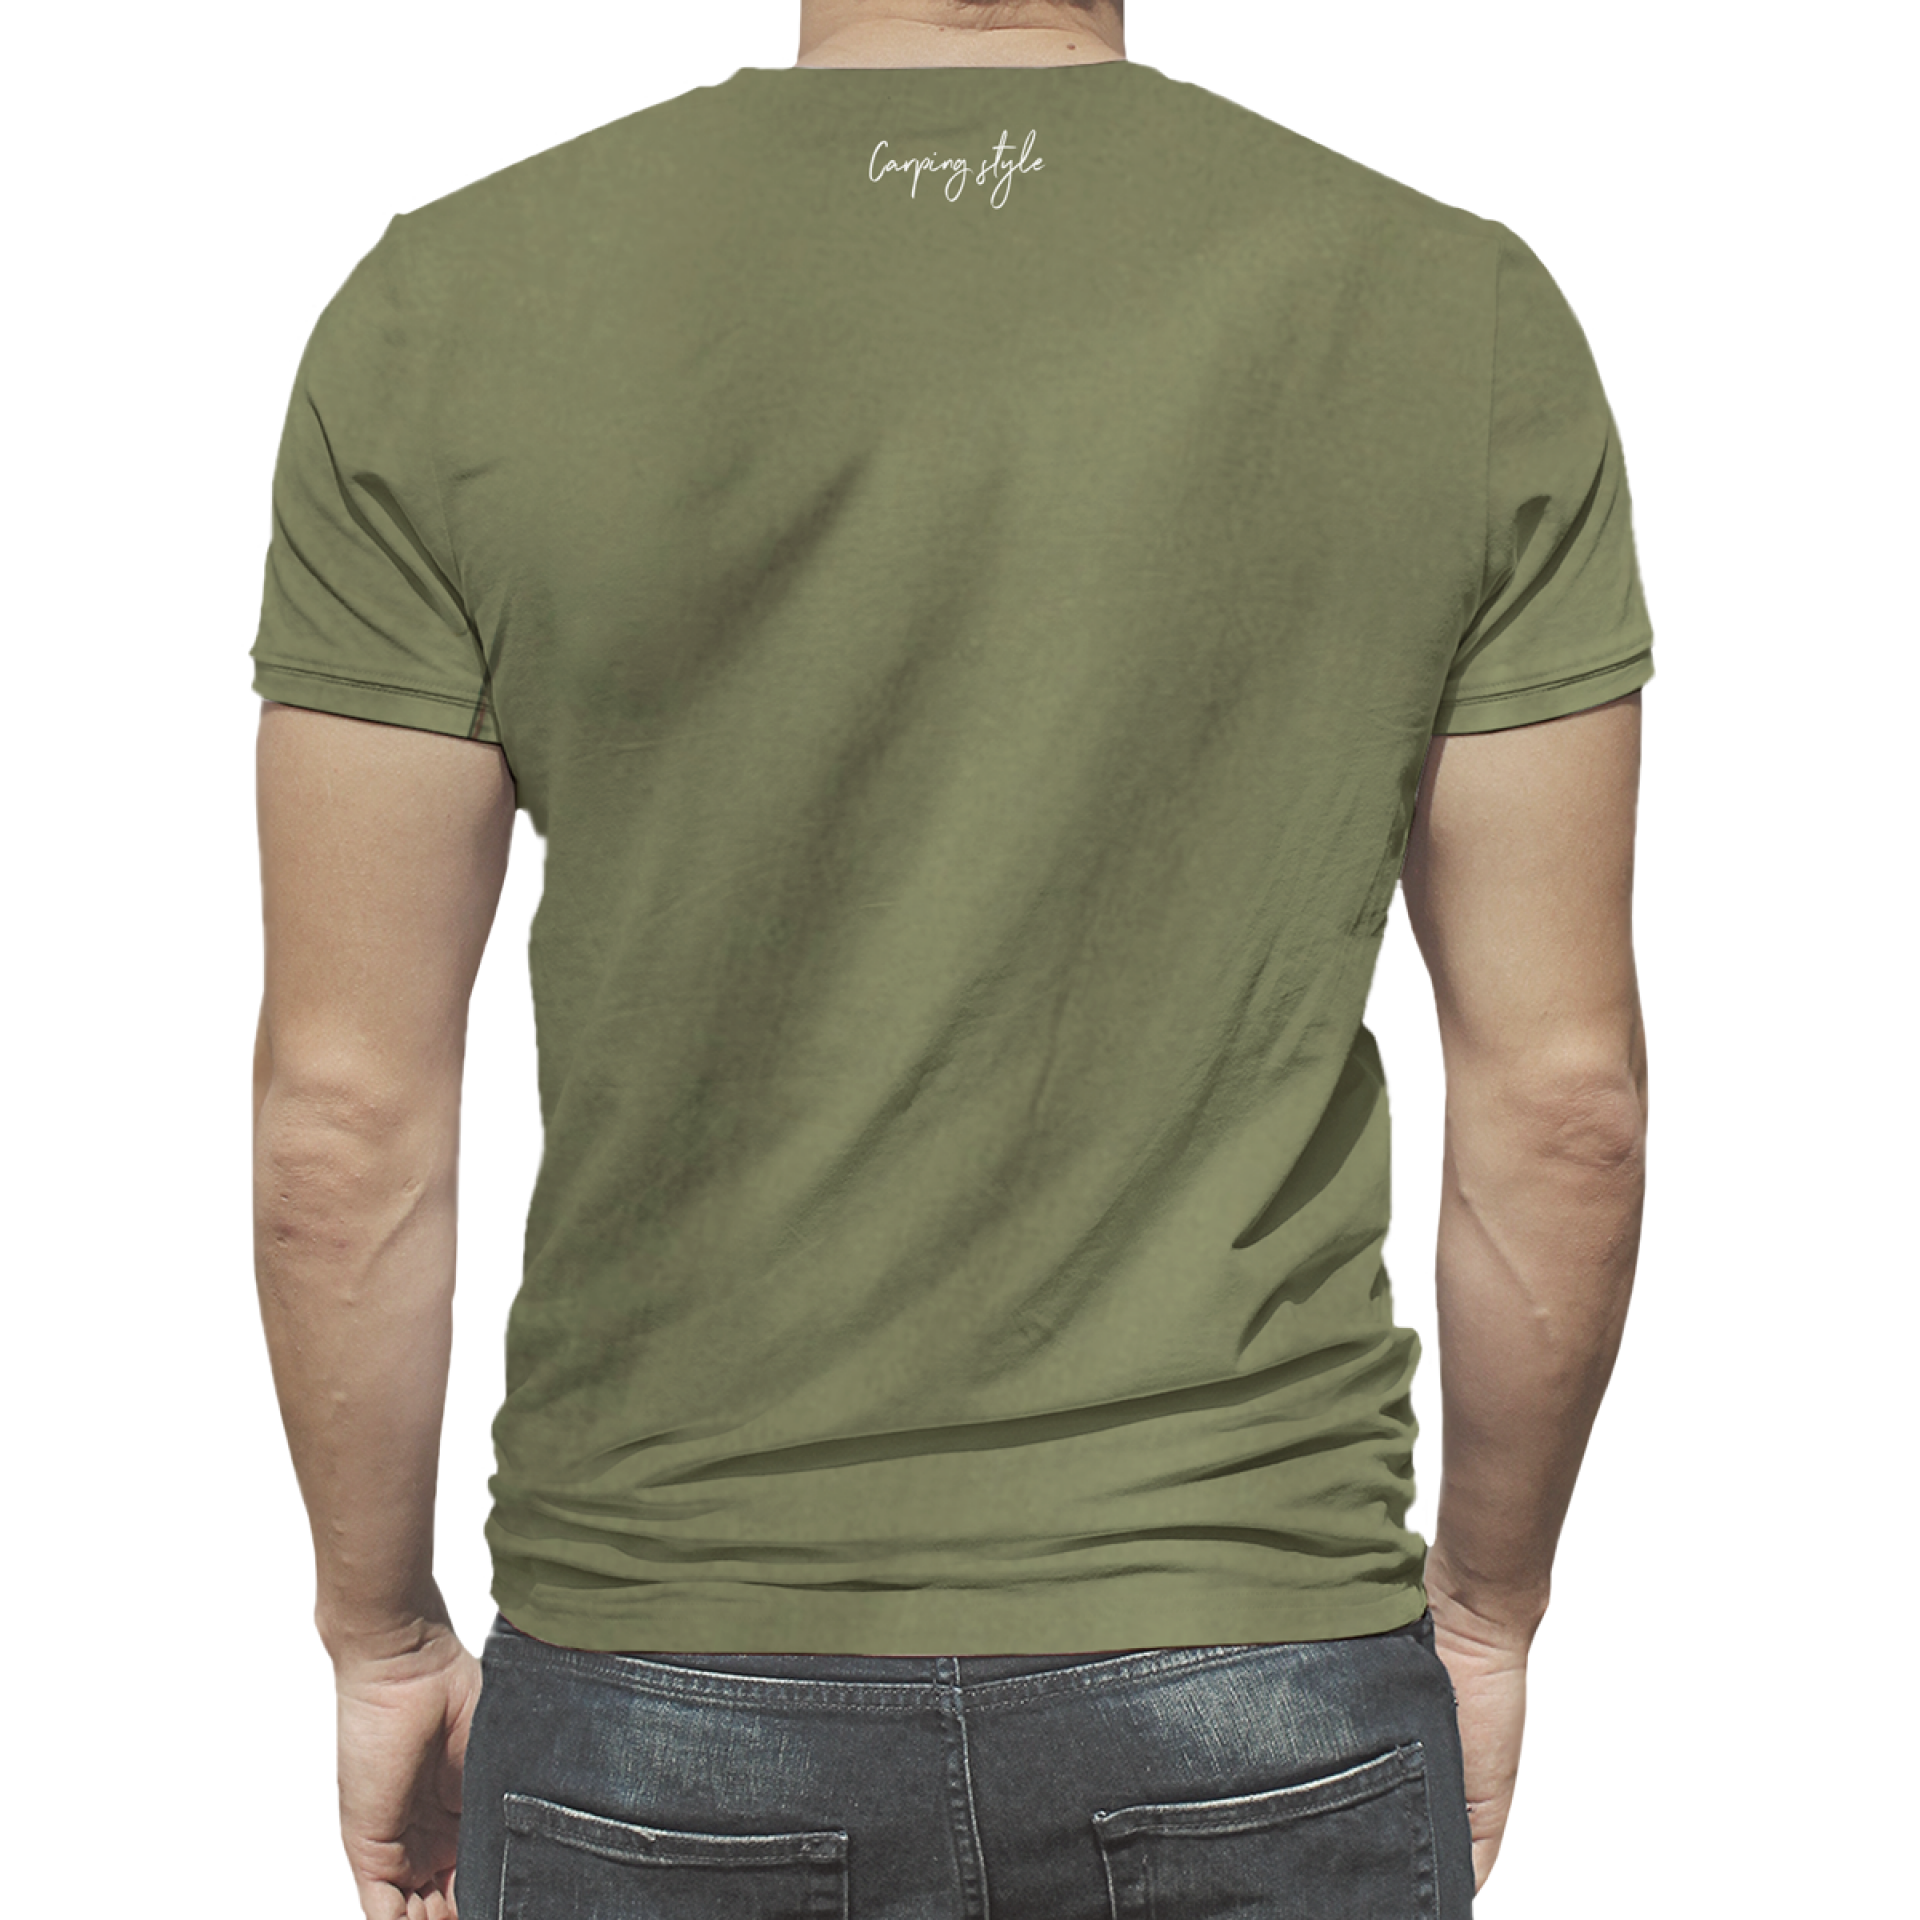 Rockworld Carping Style - Camiseta de hombre en color oliva